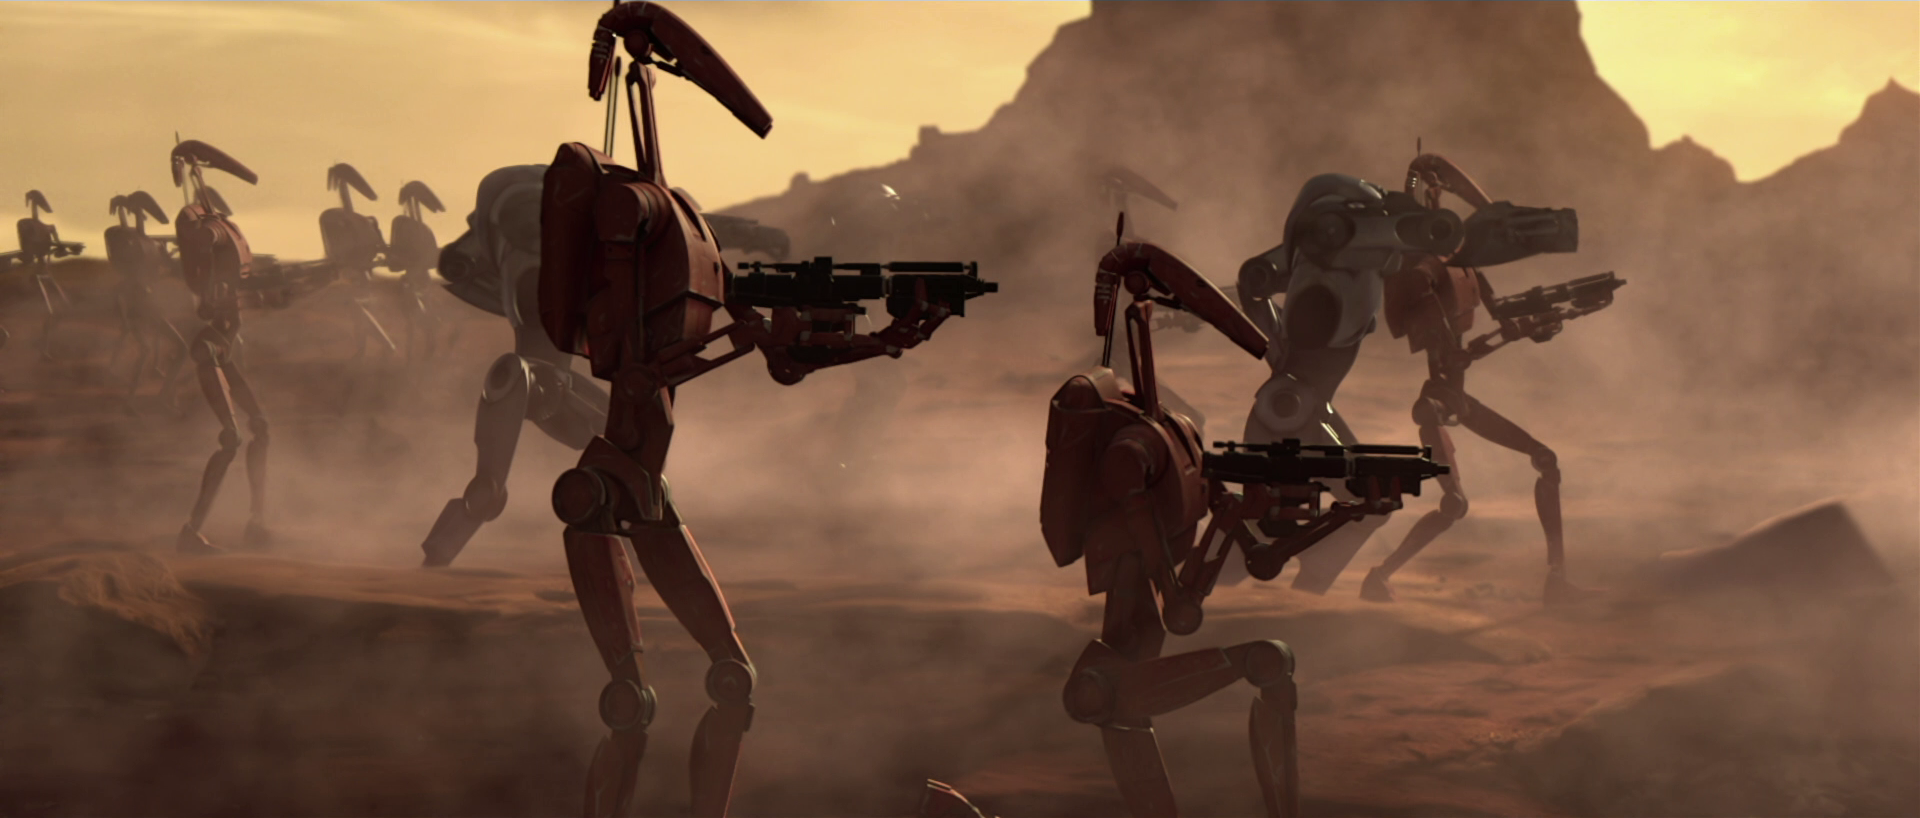 star wars battle droid types